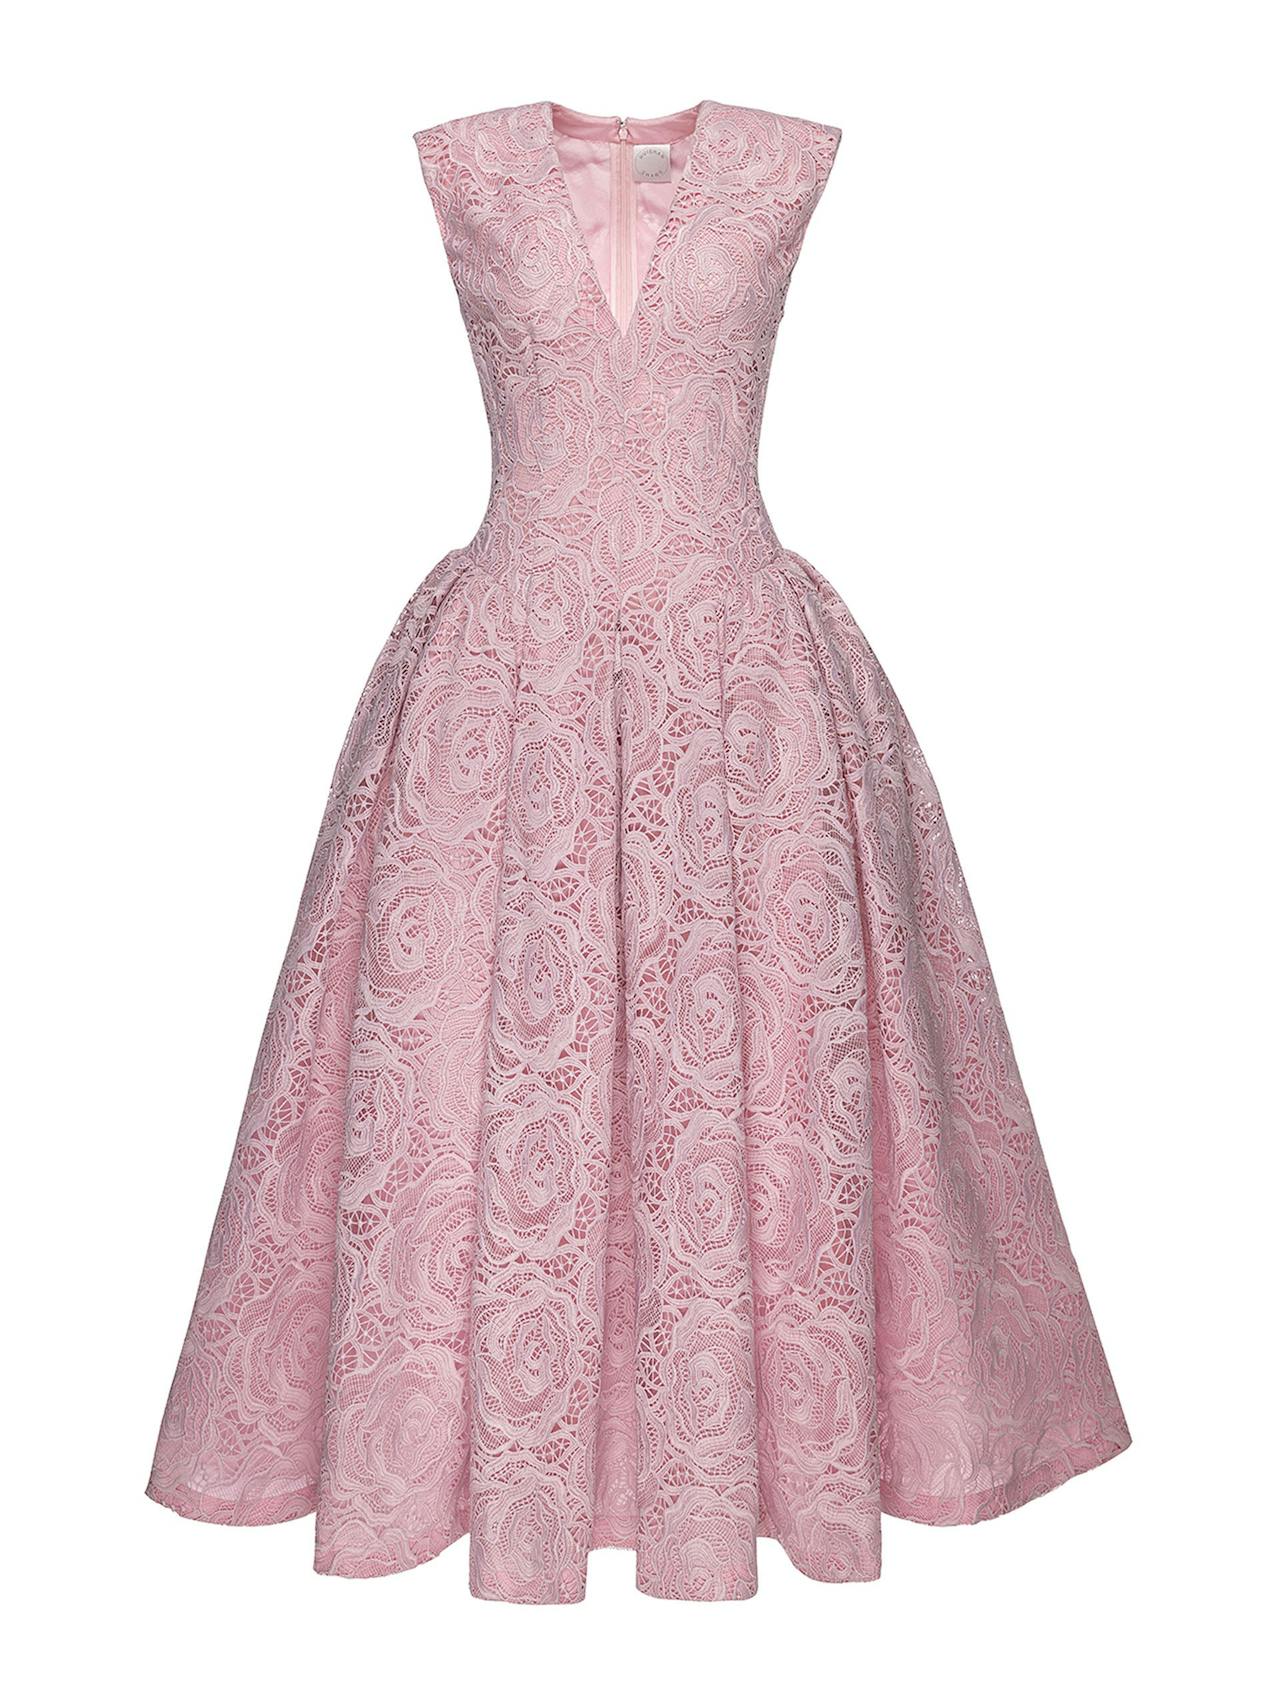 Lilac ice lace Claret dress